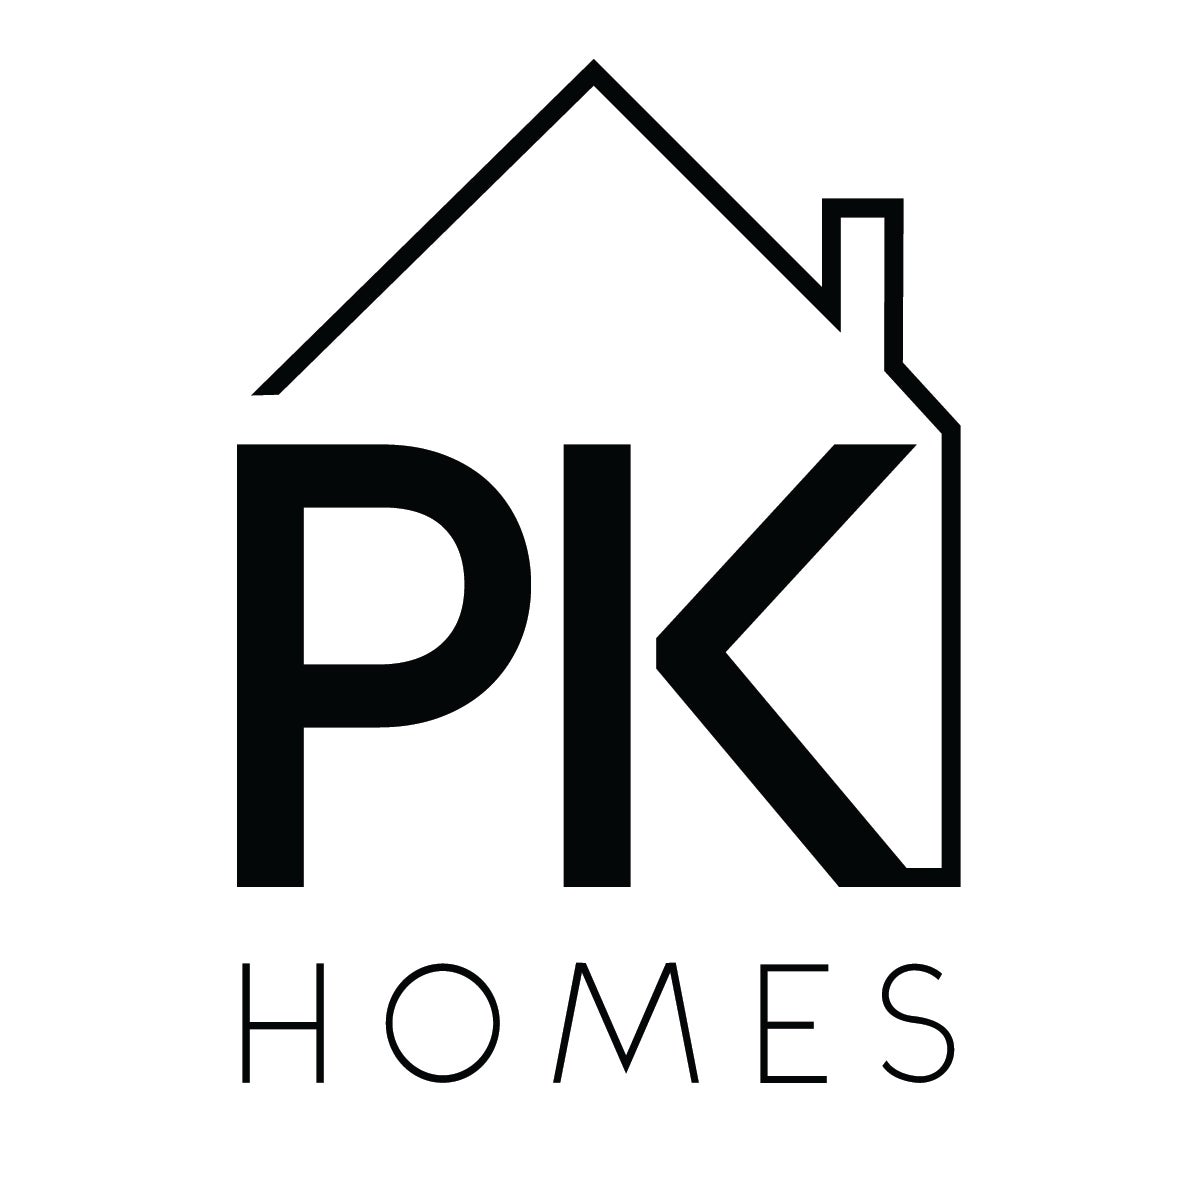 PK-Custom-Homes-Inc-Logo-Kempston-Werth-Real-Estate-Listowel